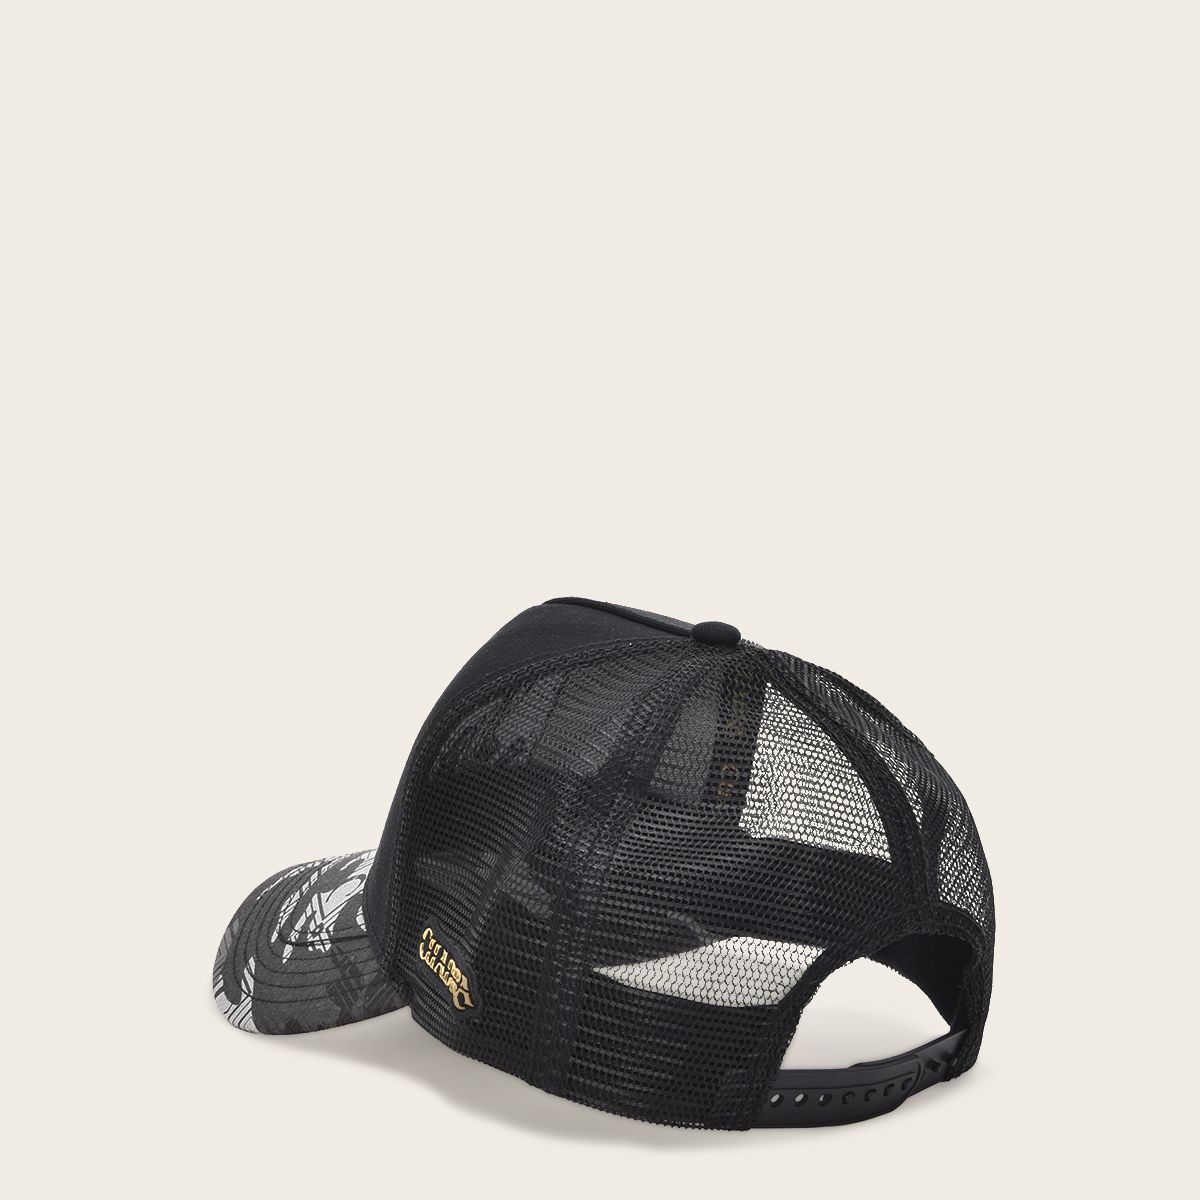 Black snapback cap with Alligator patch 4